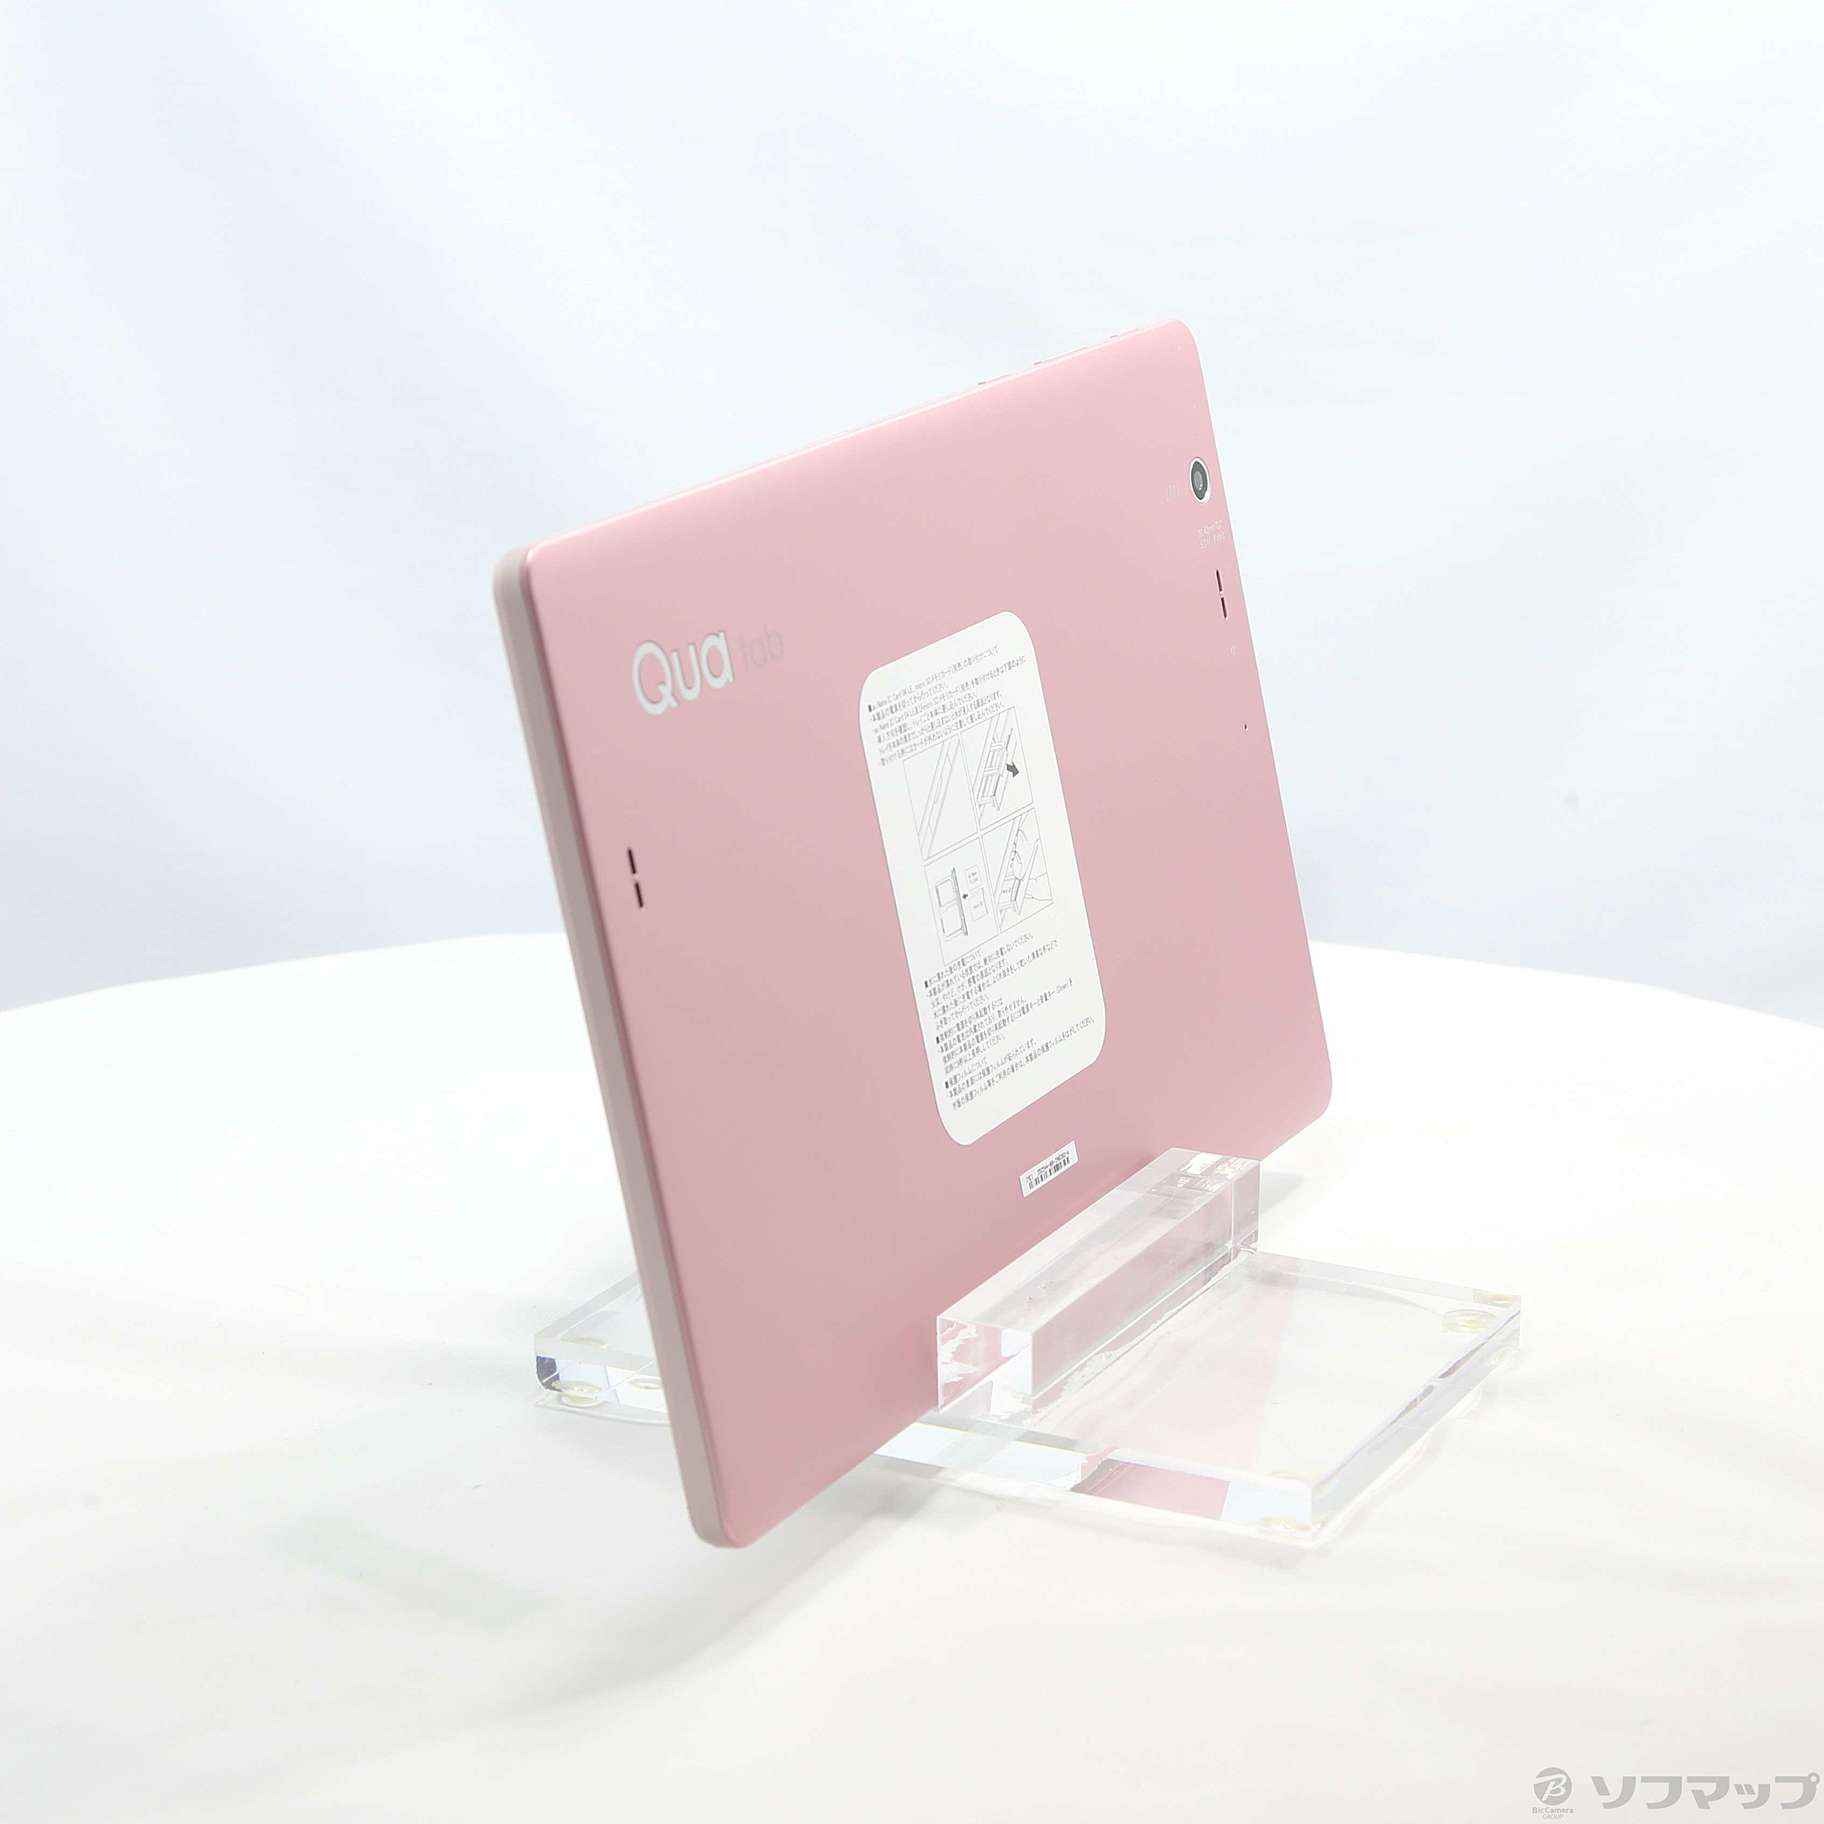 Qua tab PZ 16GB ピンク LGT32 au